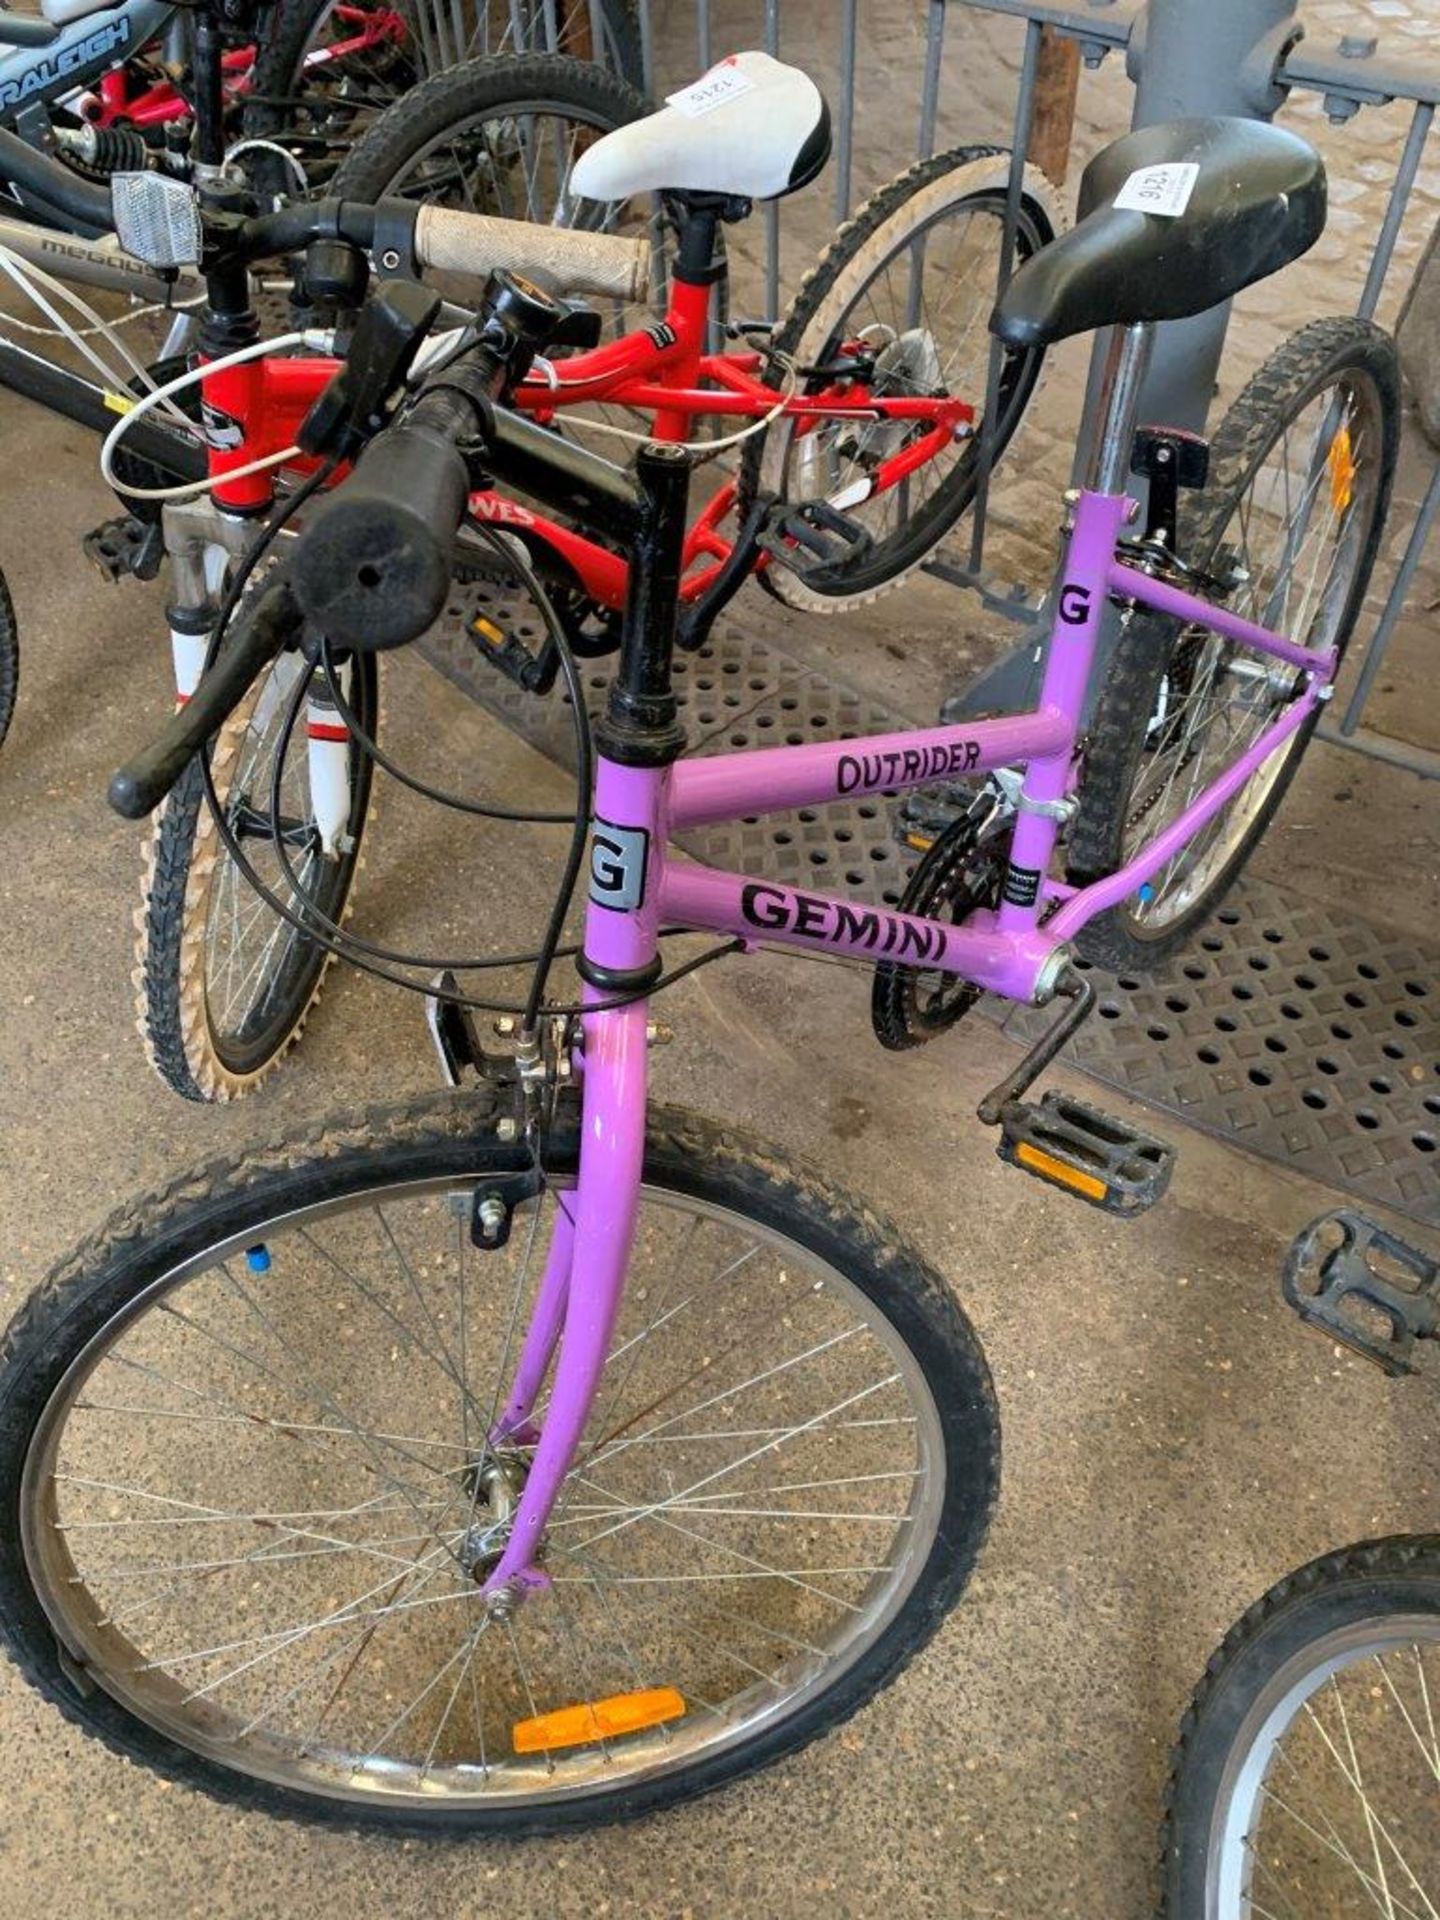 Gemini Outrider bike